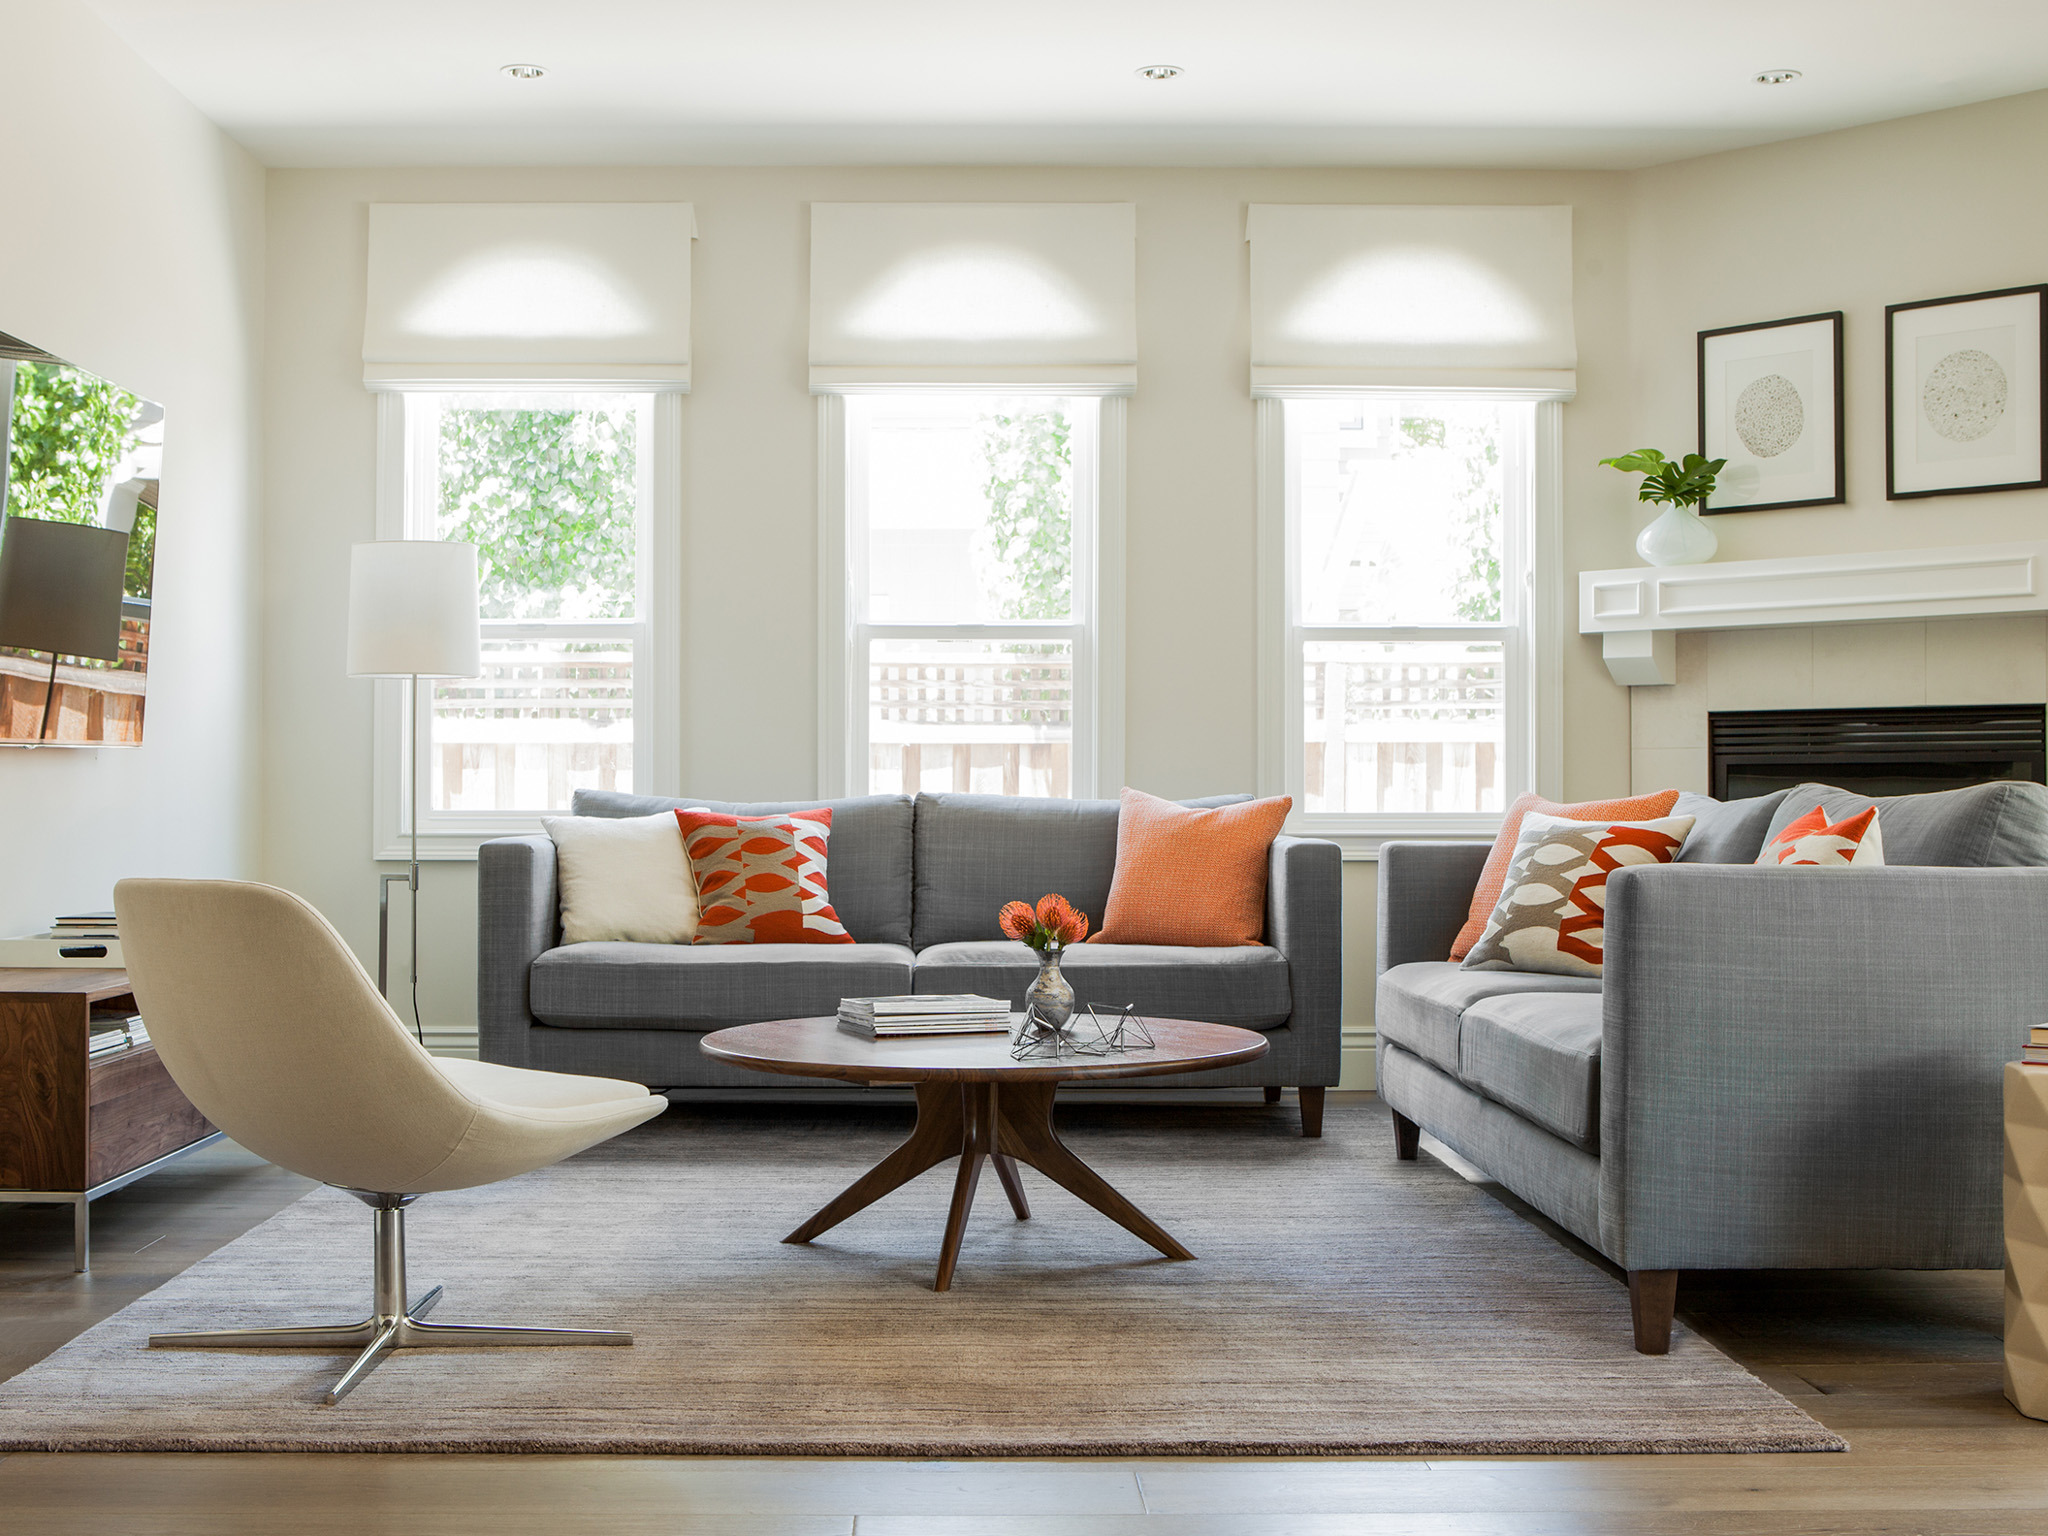 Blog Fornense: Modern Home - Residential Interior Design by DKOR Interiors